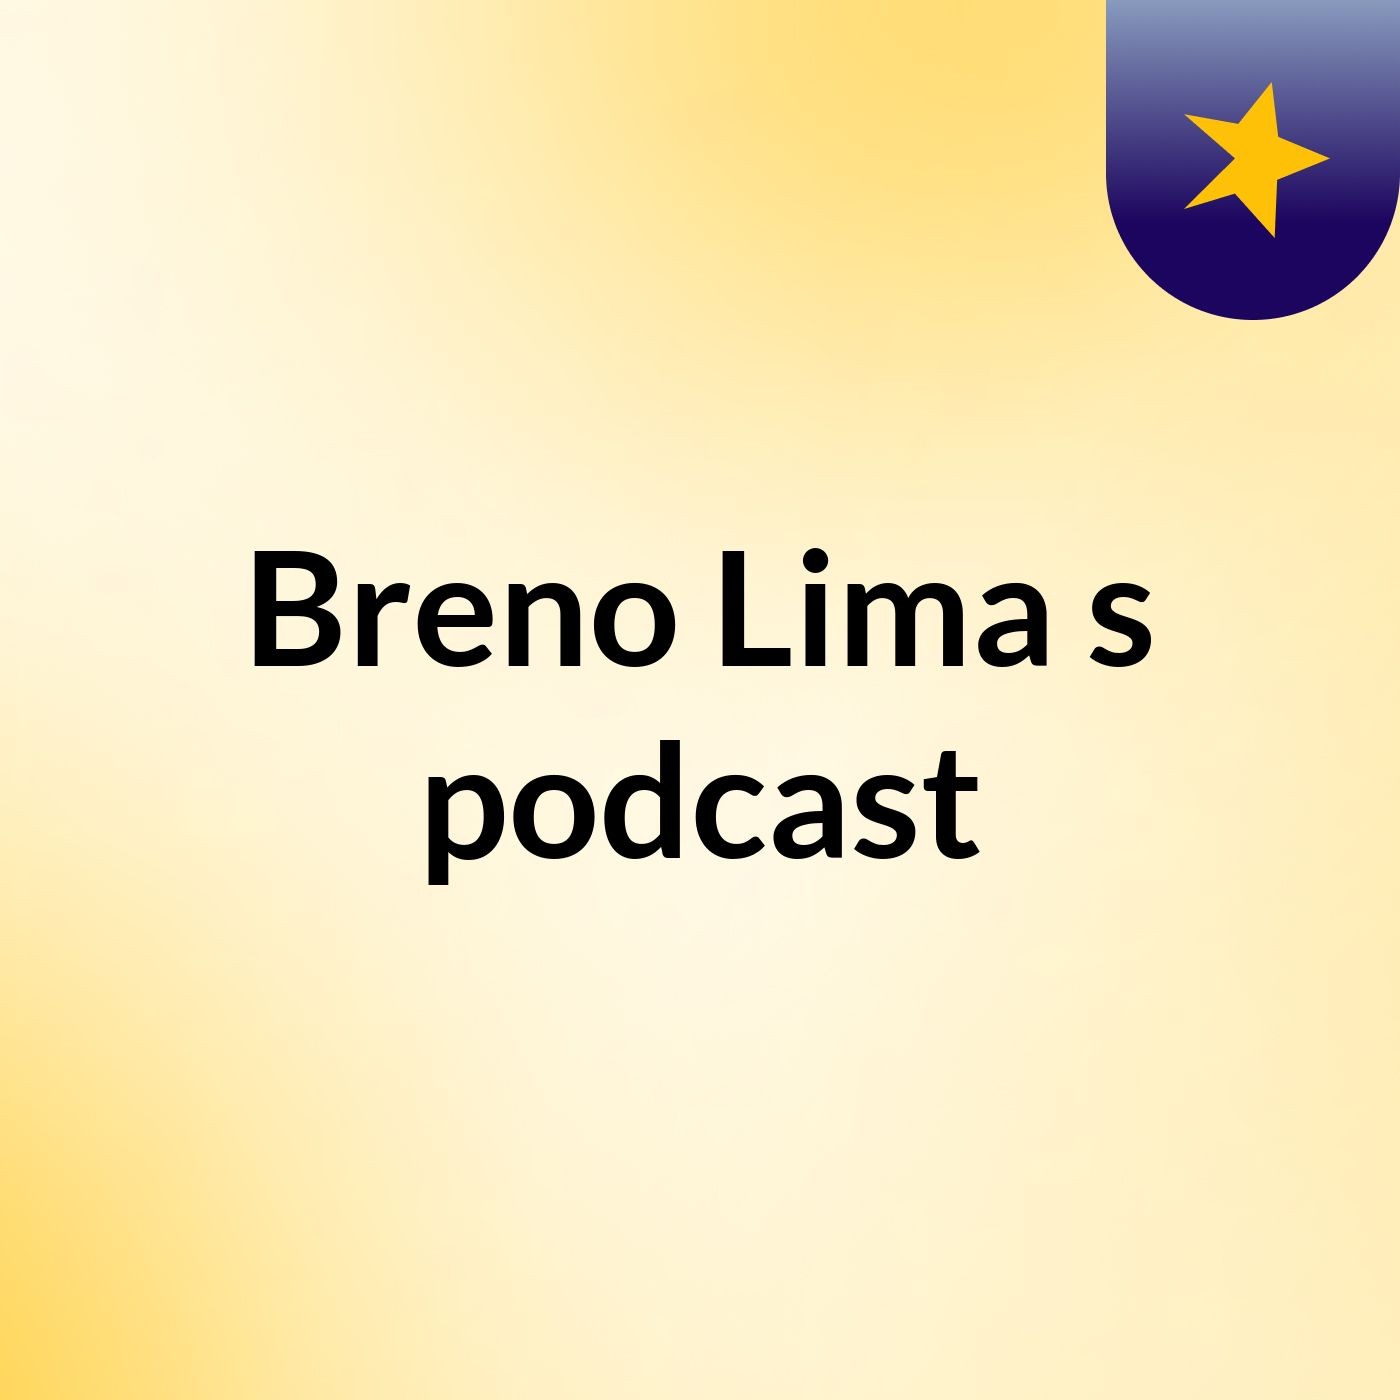 Breno Lima's podcast